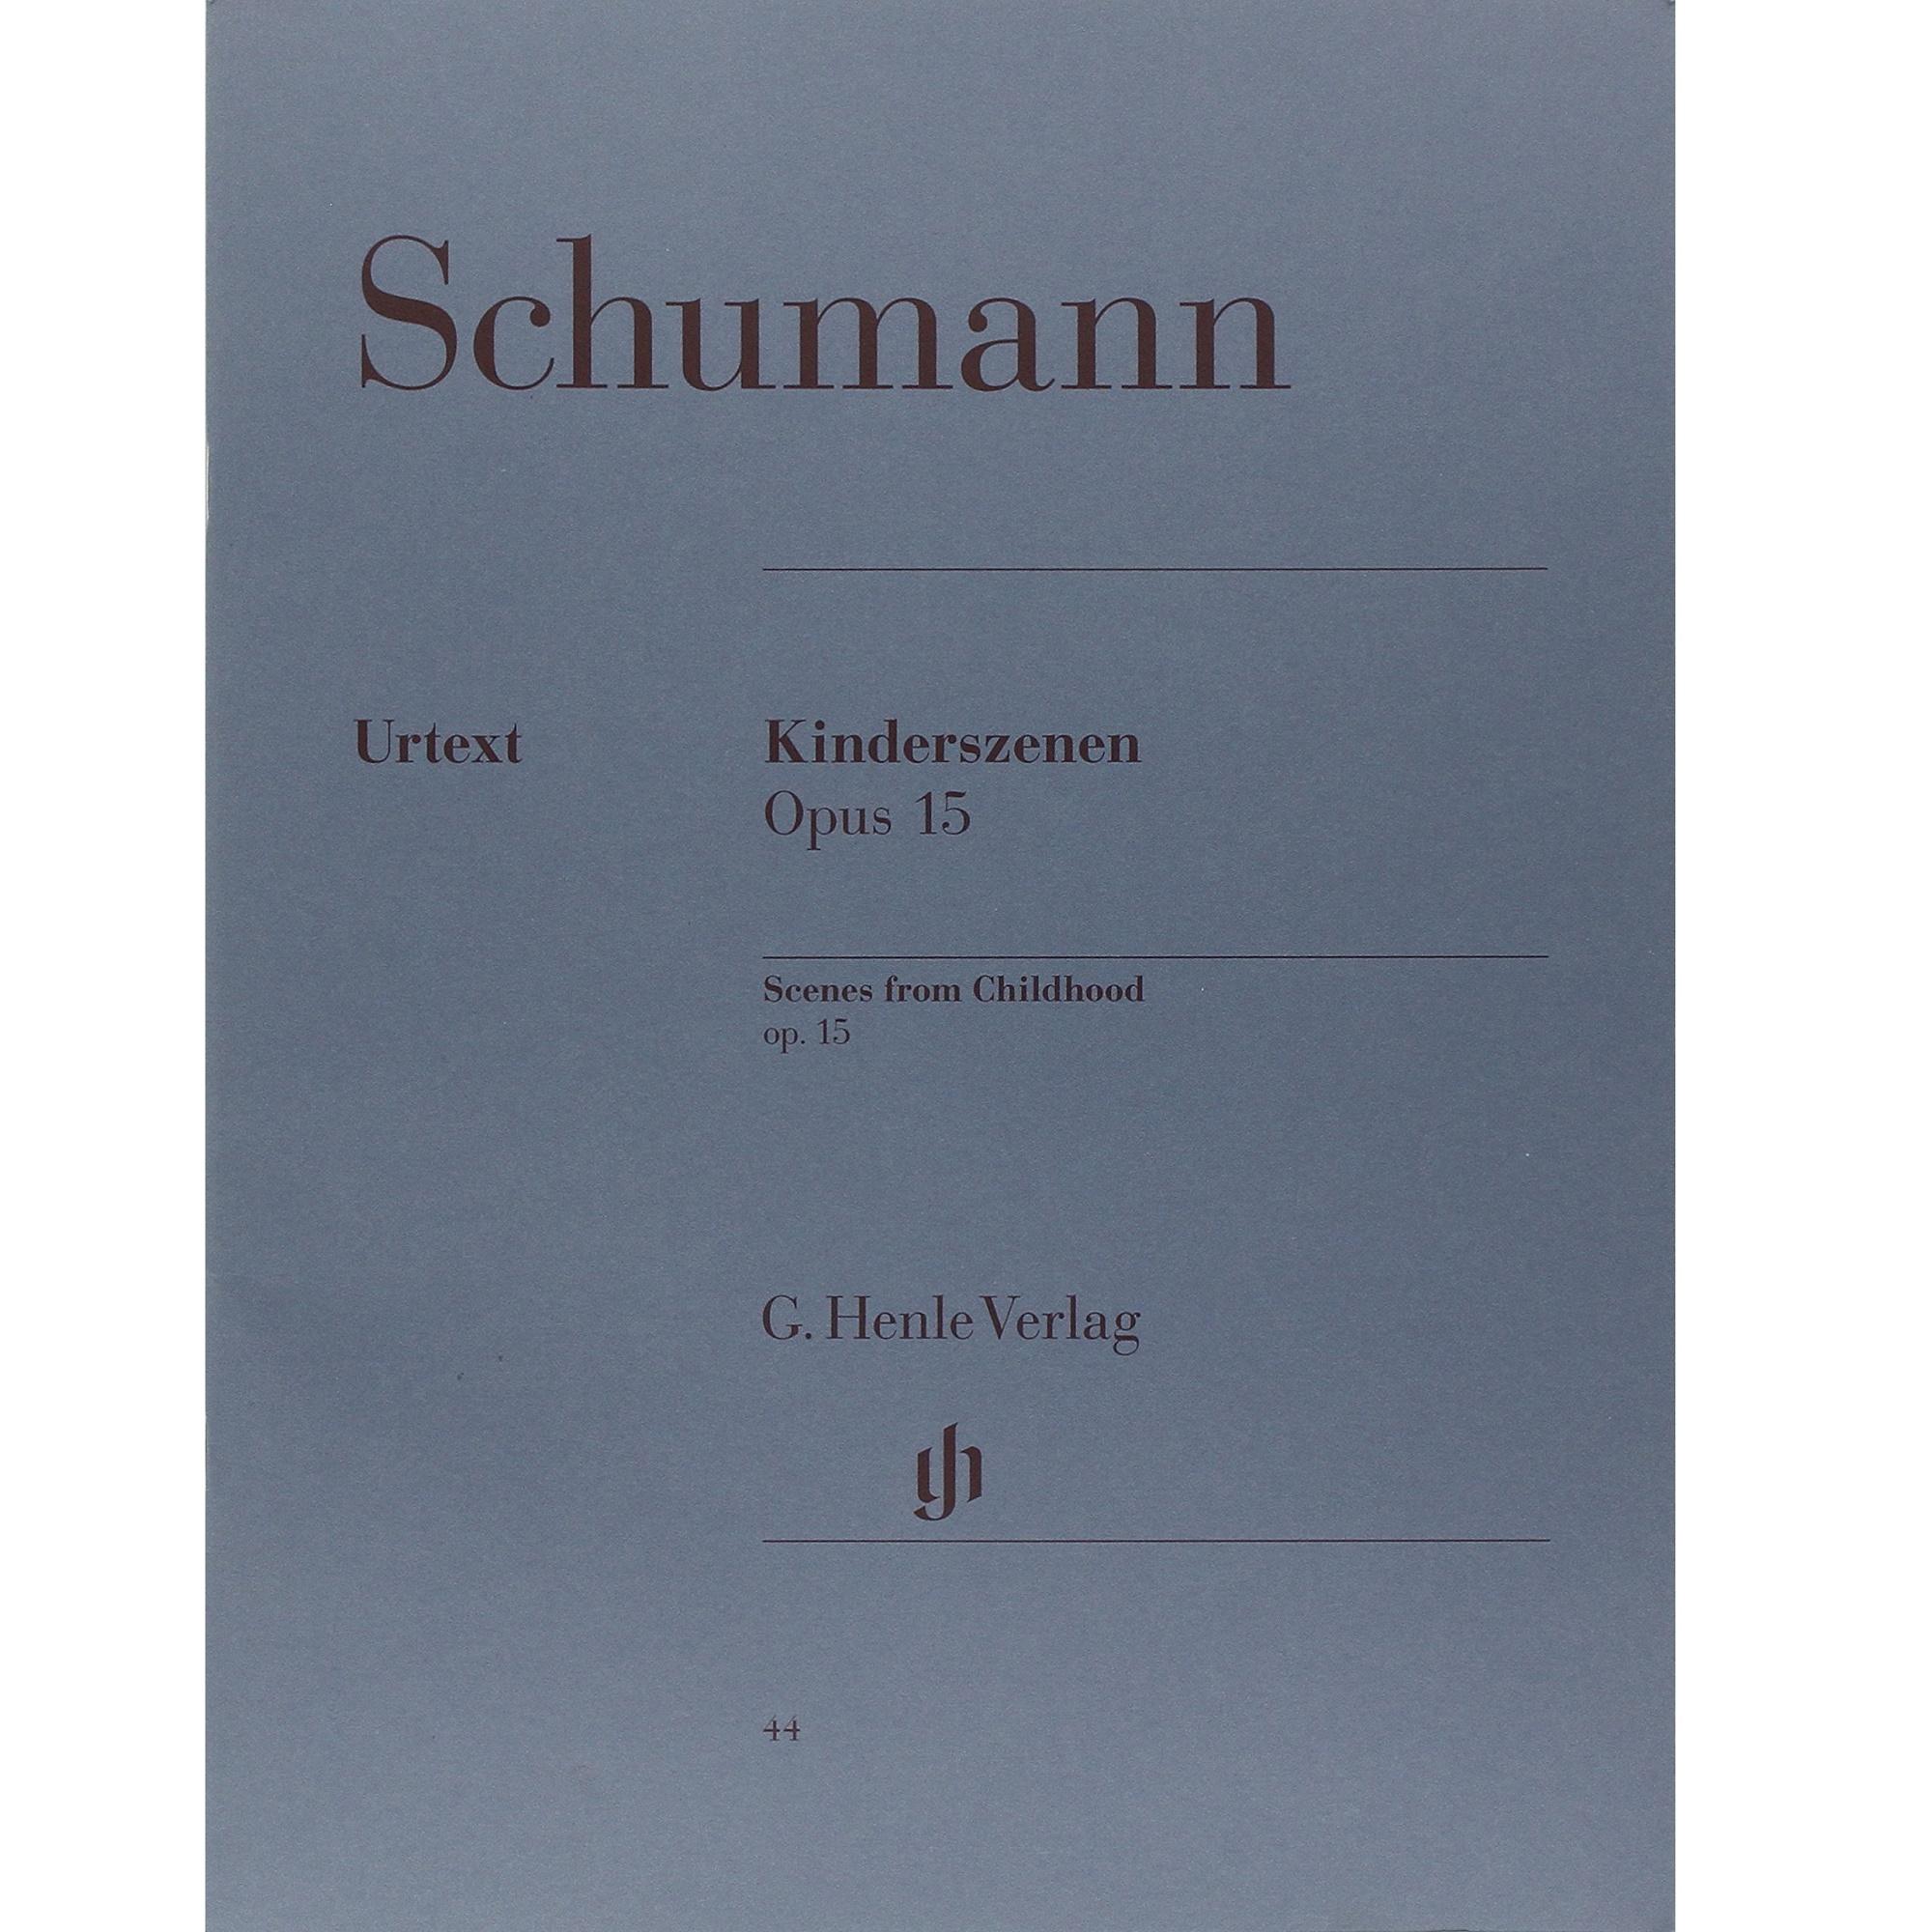 Schumann Kinderszenen Opus 15 Scenes from Childhood op. 15 Urtext - Verlag